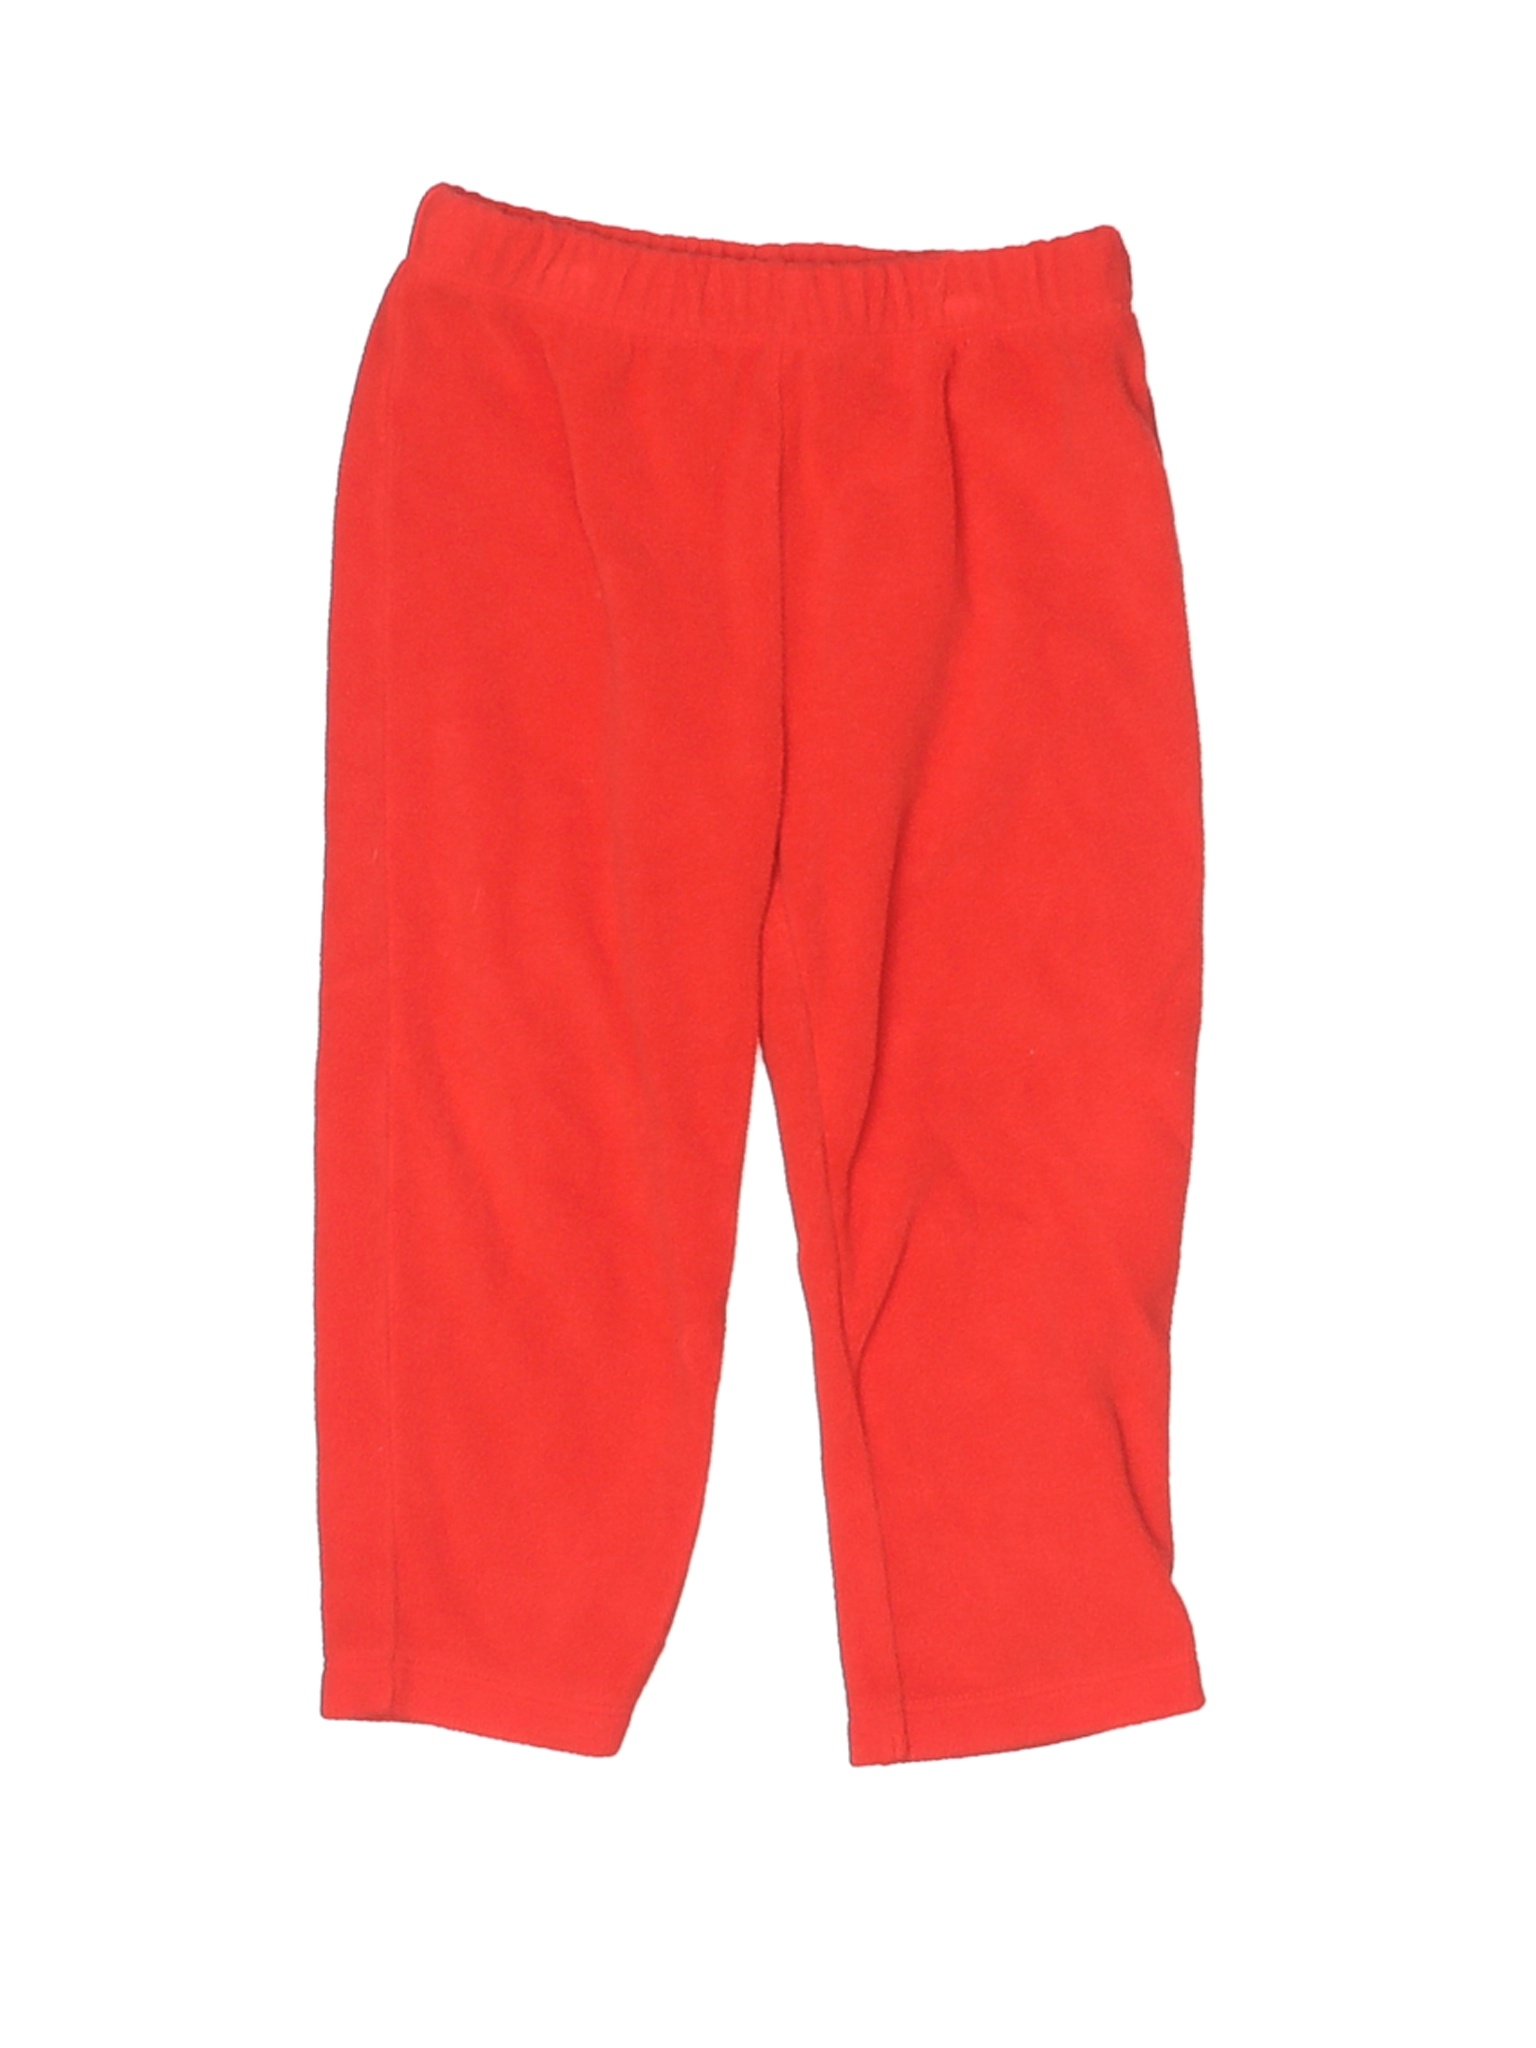 Carter's Boys Orange Fleece Pants 24 Months | eBay